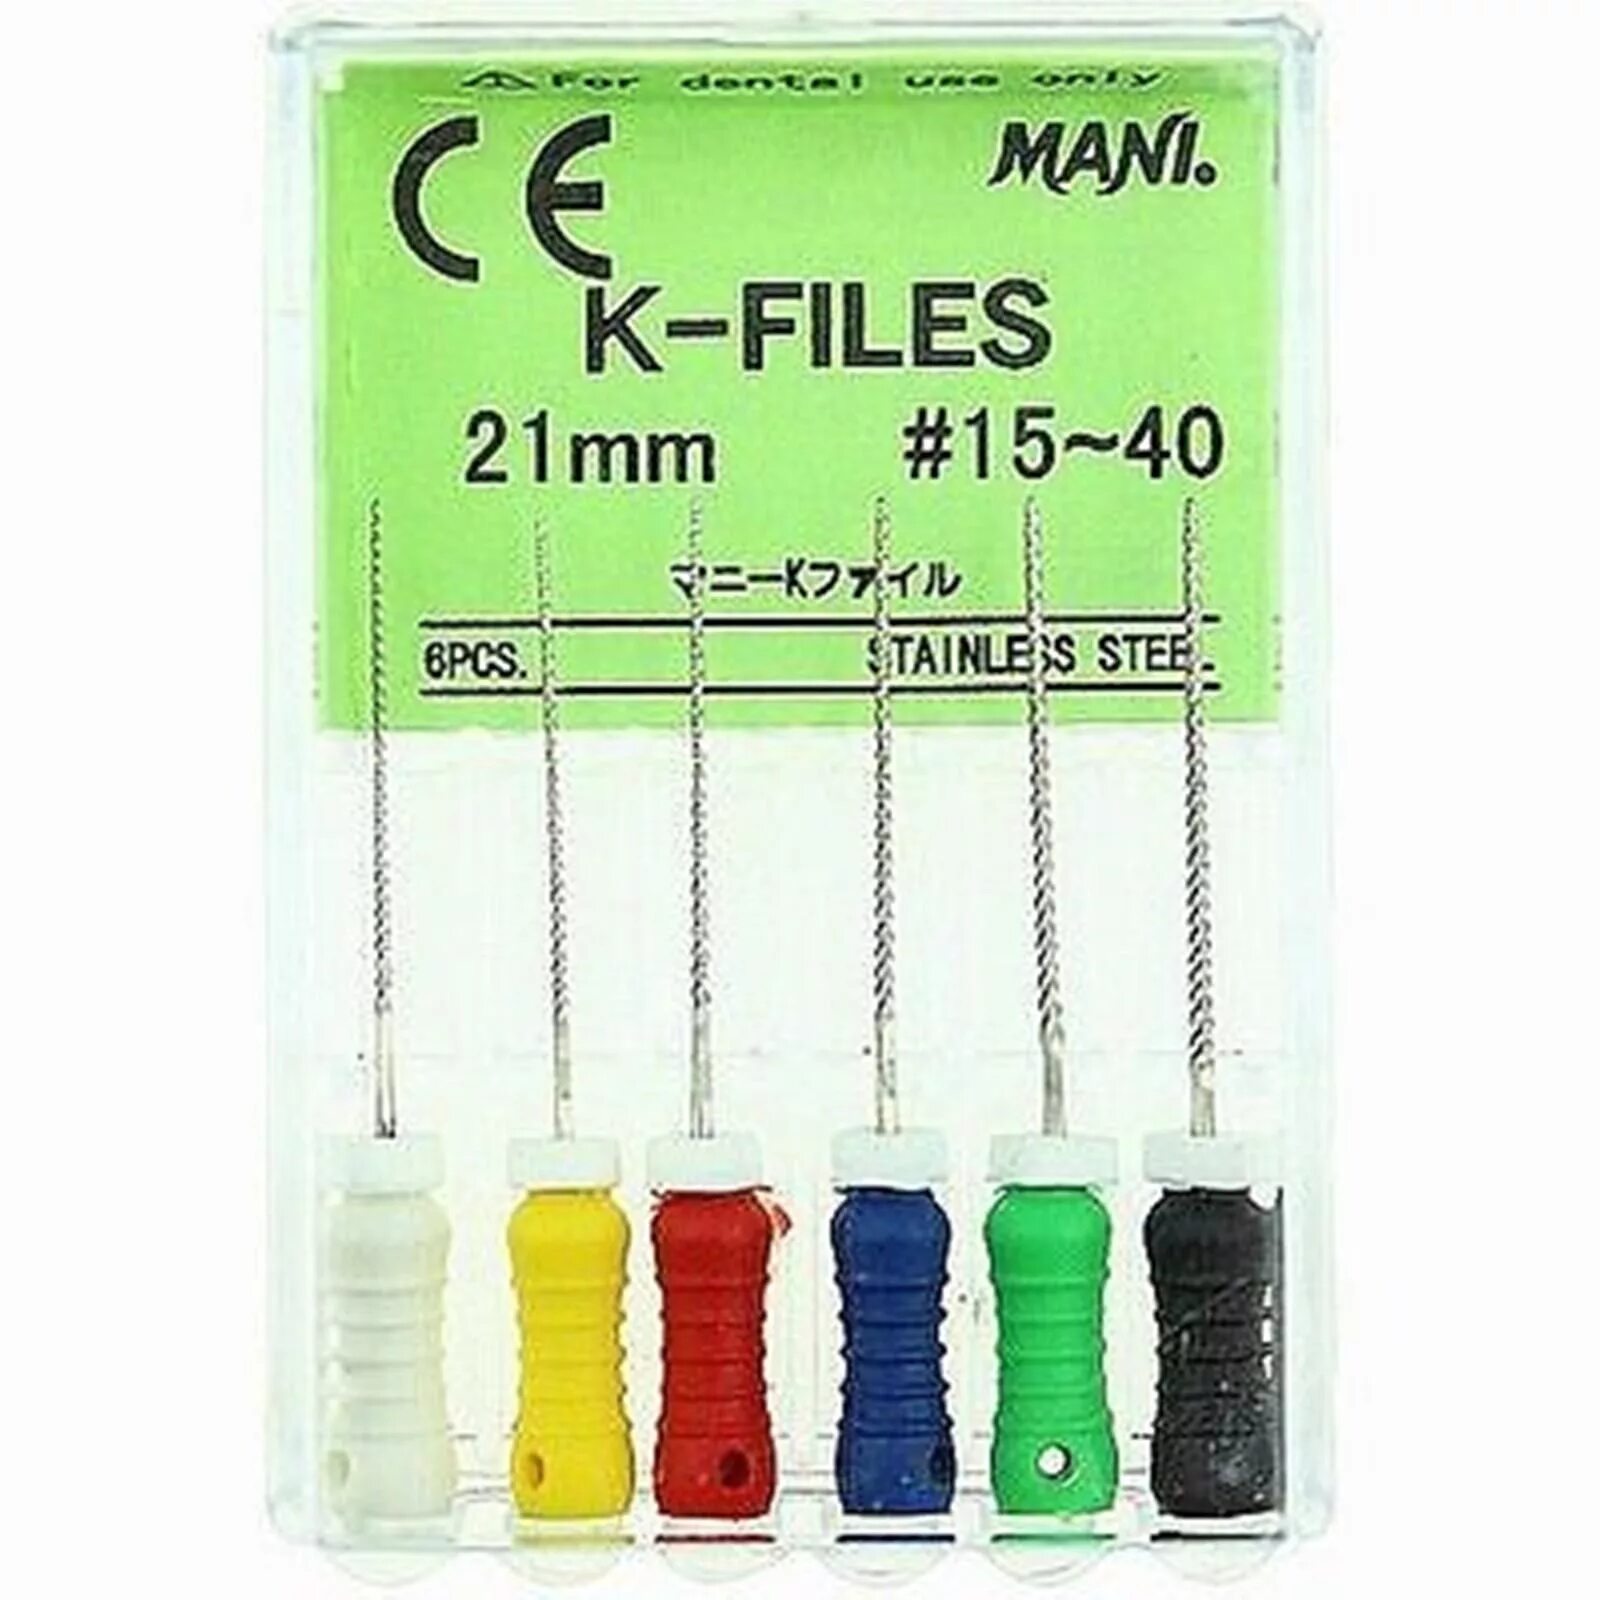 K-files к-файлы mani (Япония) 21 мм. K-files mani 6шт 25мм ISO 06. K-files mani 6шт 25мм 15. Дрильборы ручные к-файлы №10 мани.